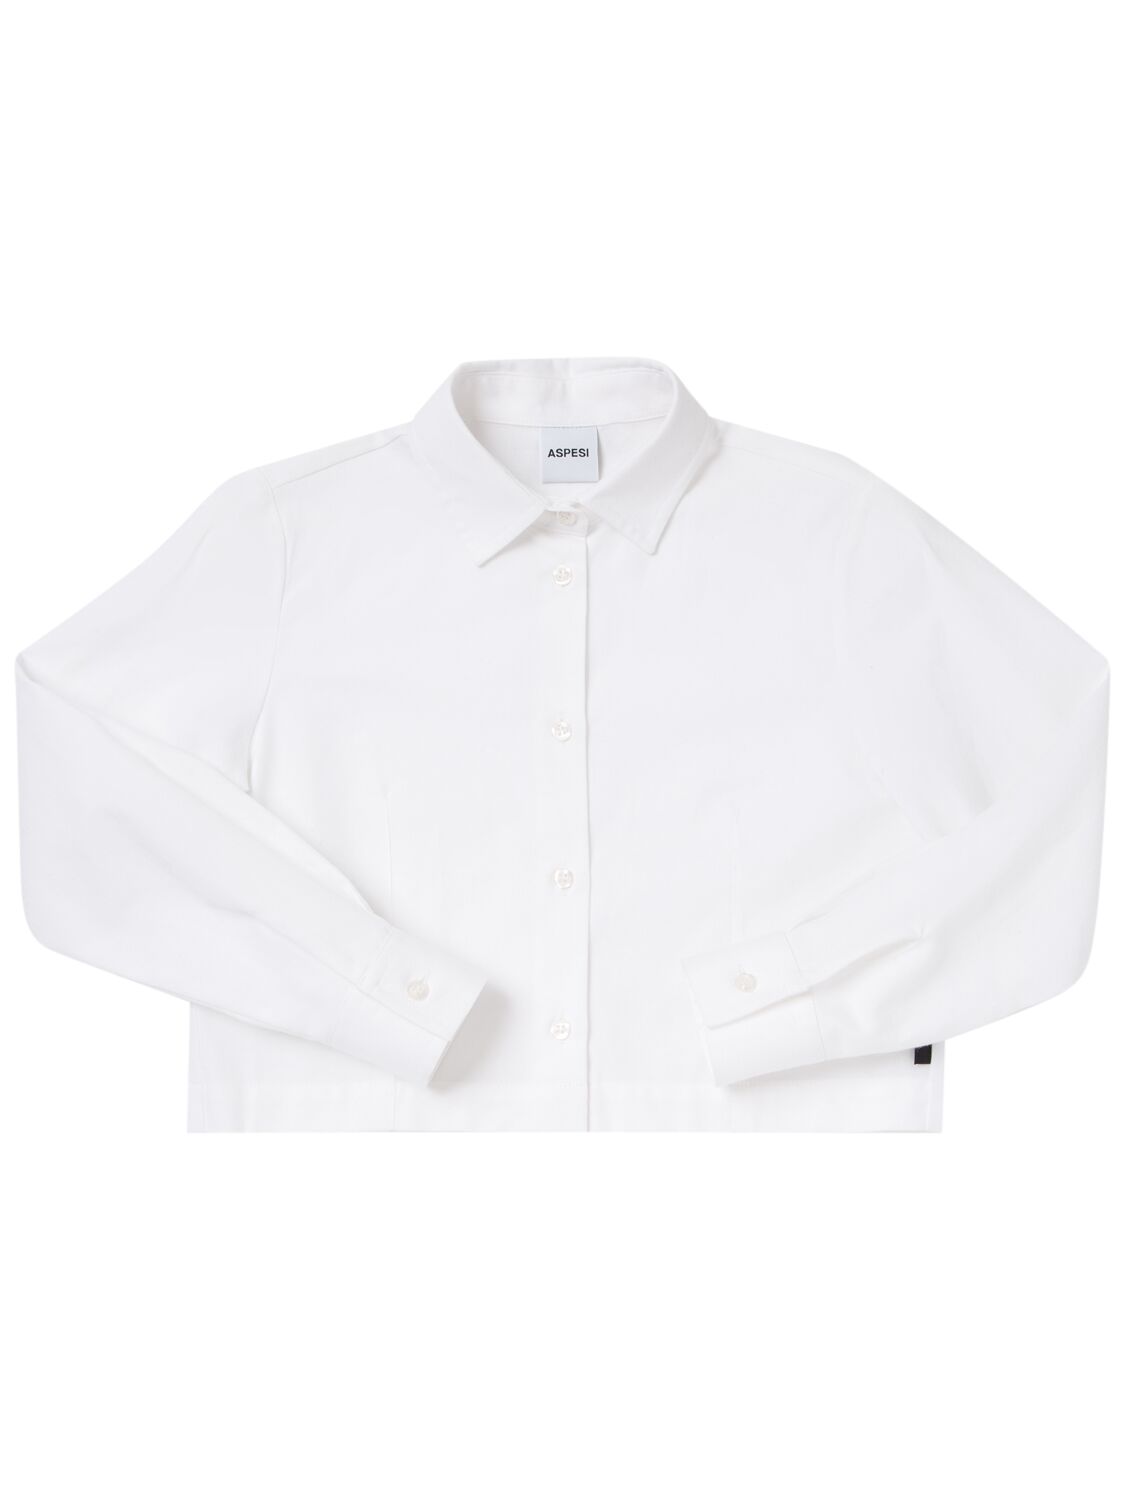 Aspesi Cotton Poplin Shirt In White